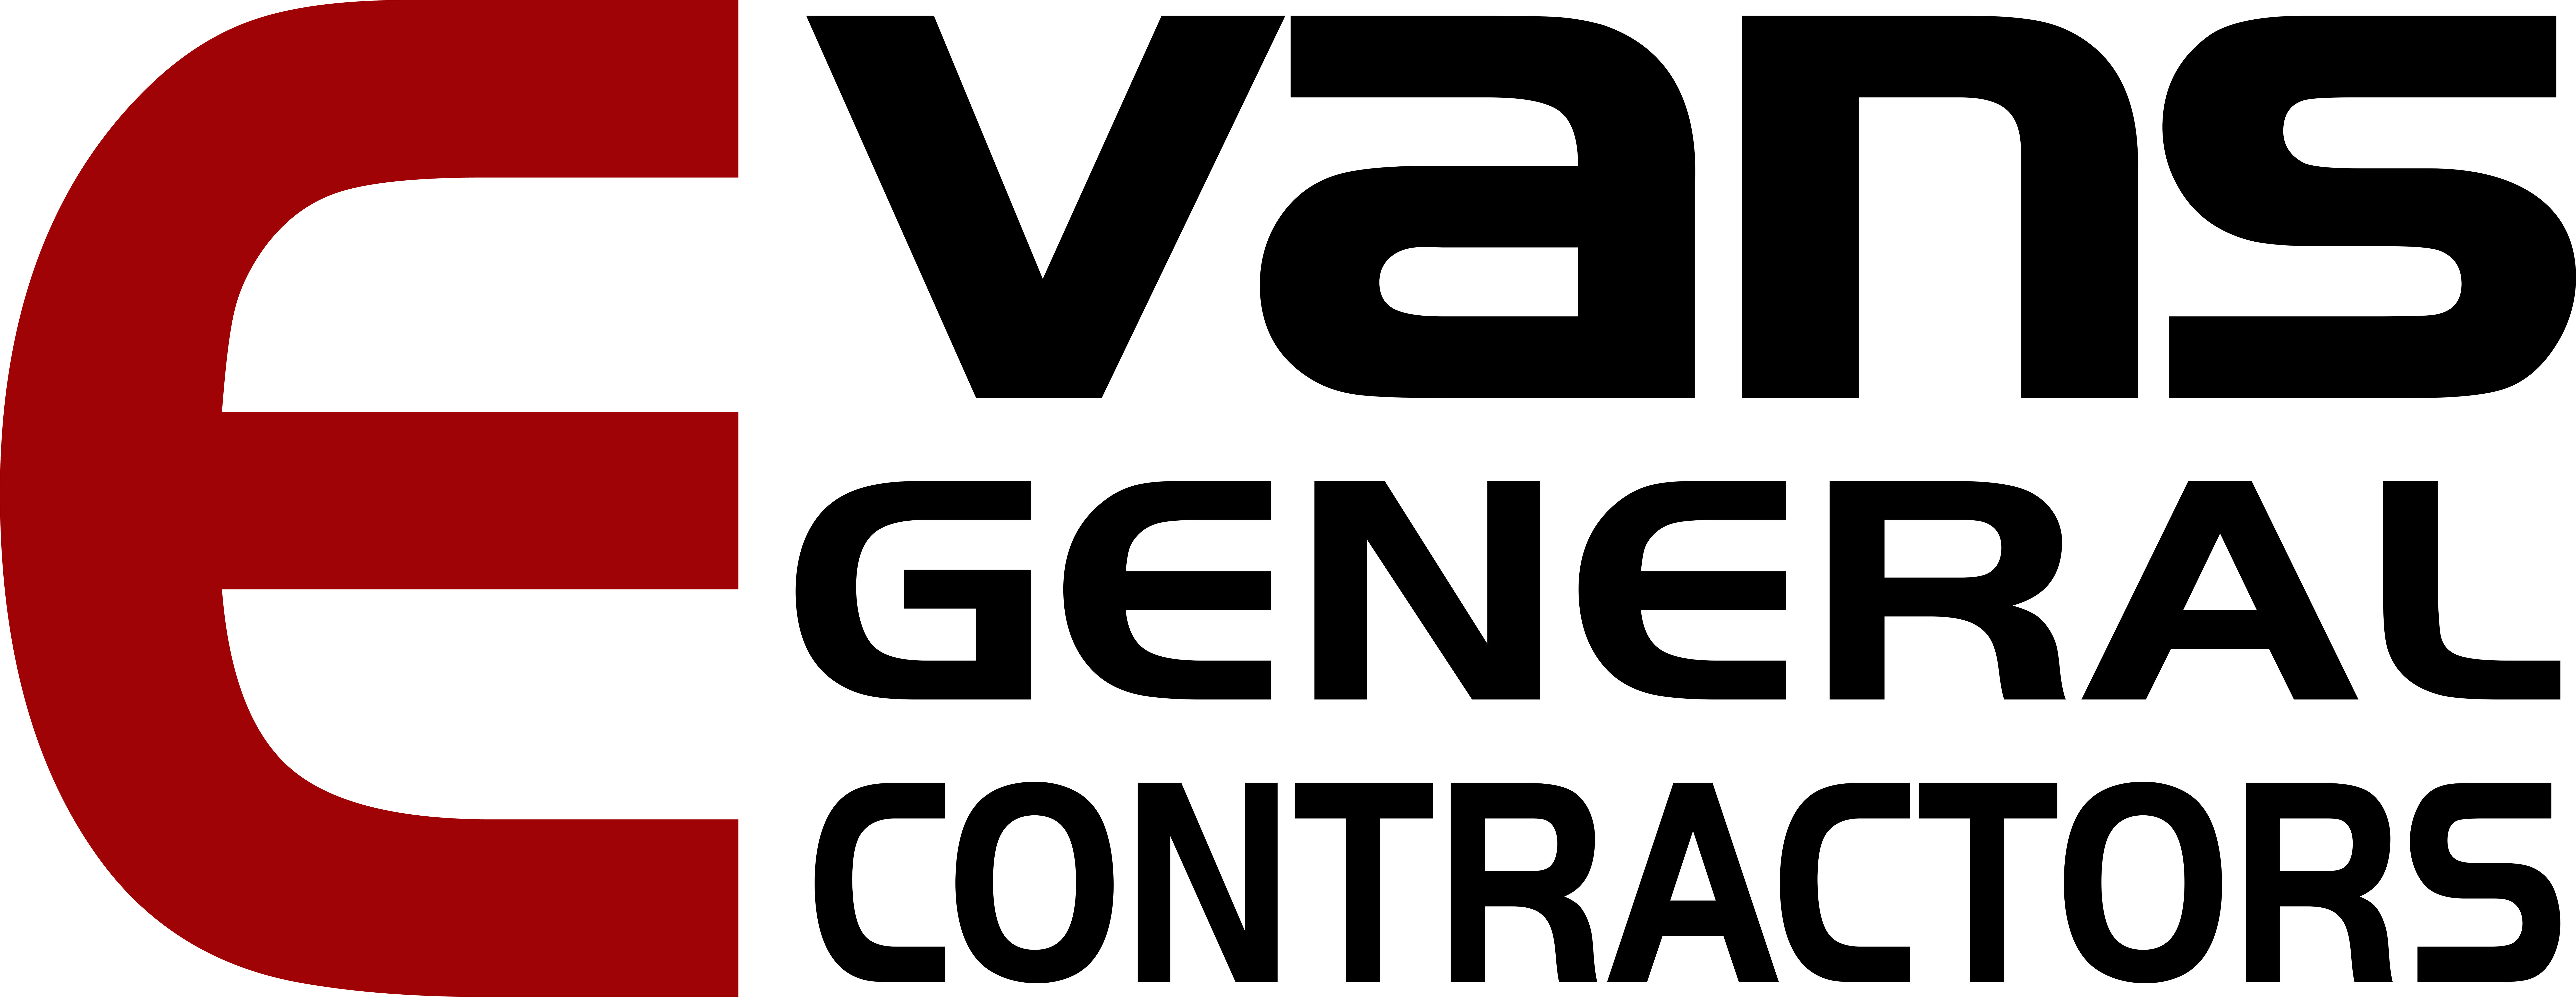 Rinamar Logo - GF Linamar – Evans General Contractors